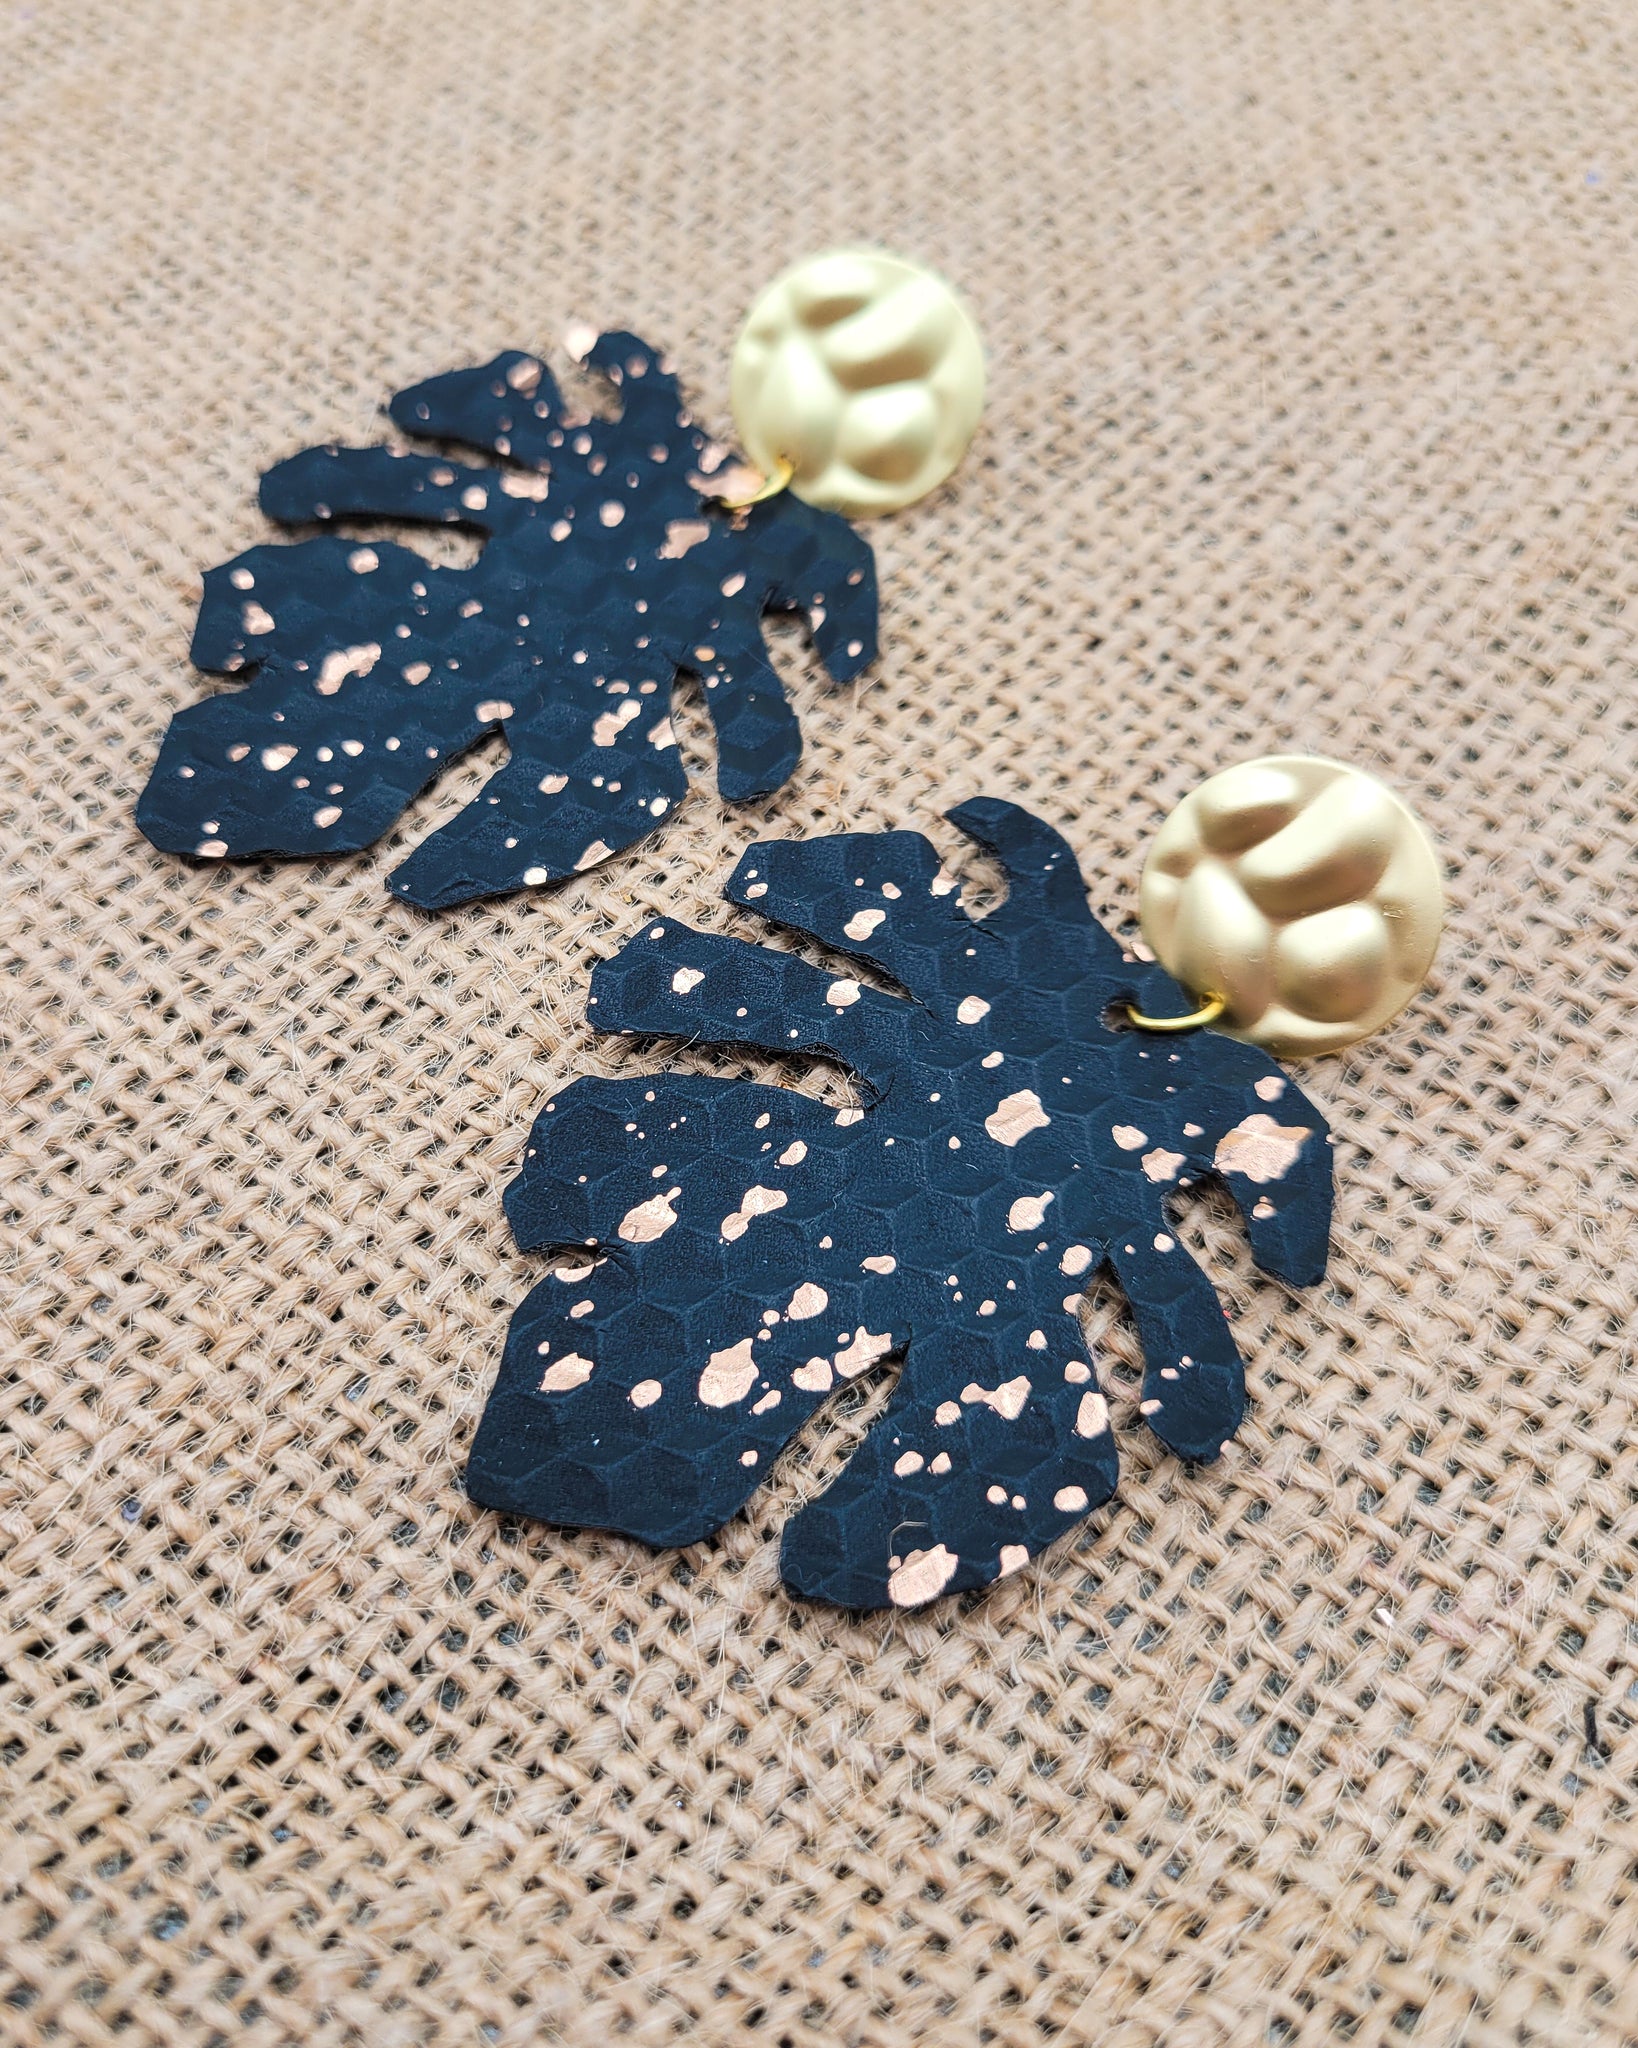 Black and Gold Monstera Leaf Earrings